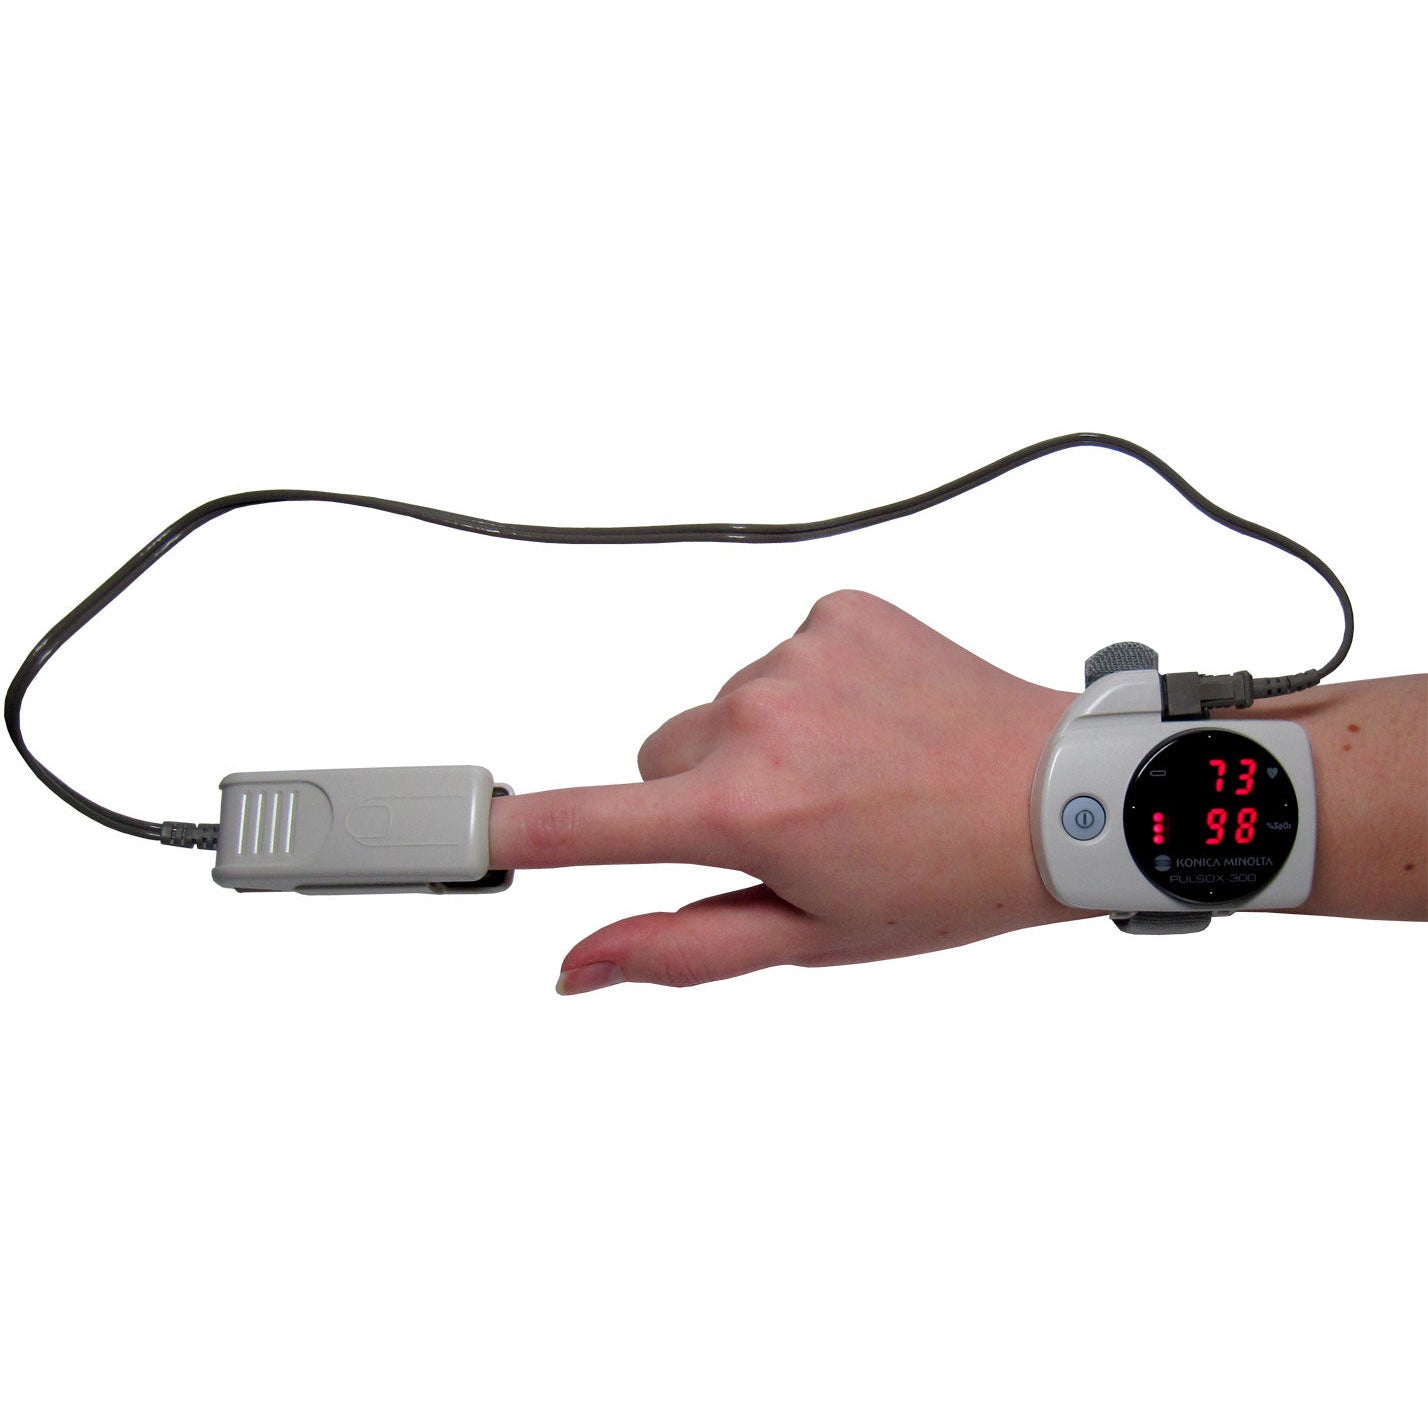 Konica Minolta Pulsox 300 Oximeter with SR-5C with Finger Clip Probe